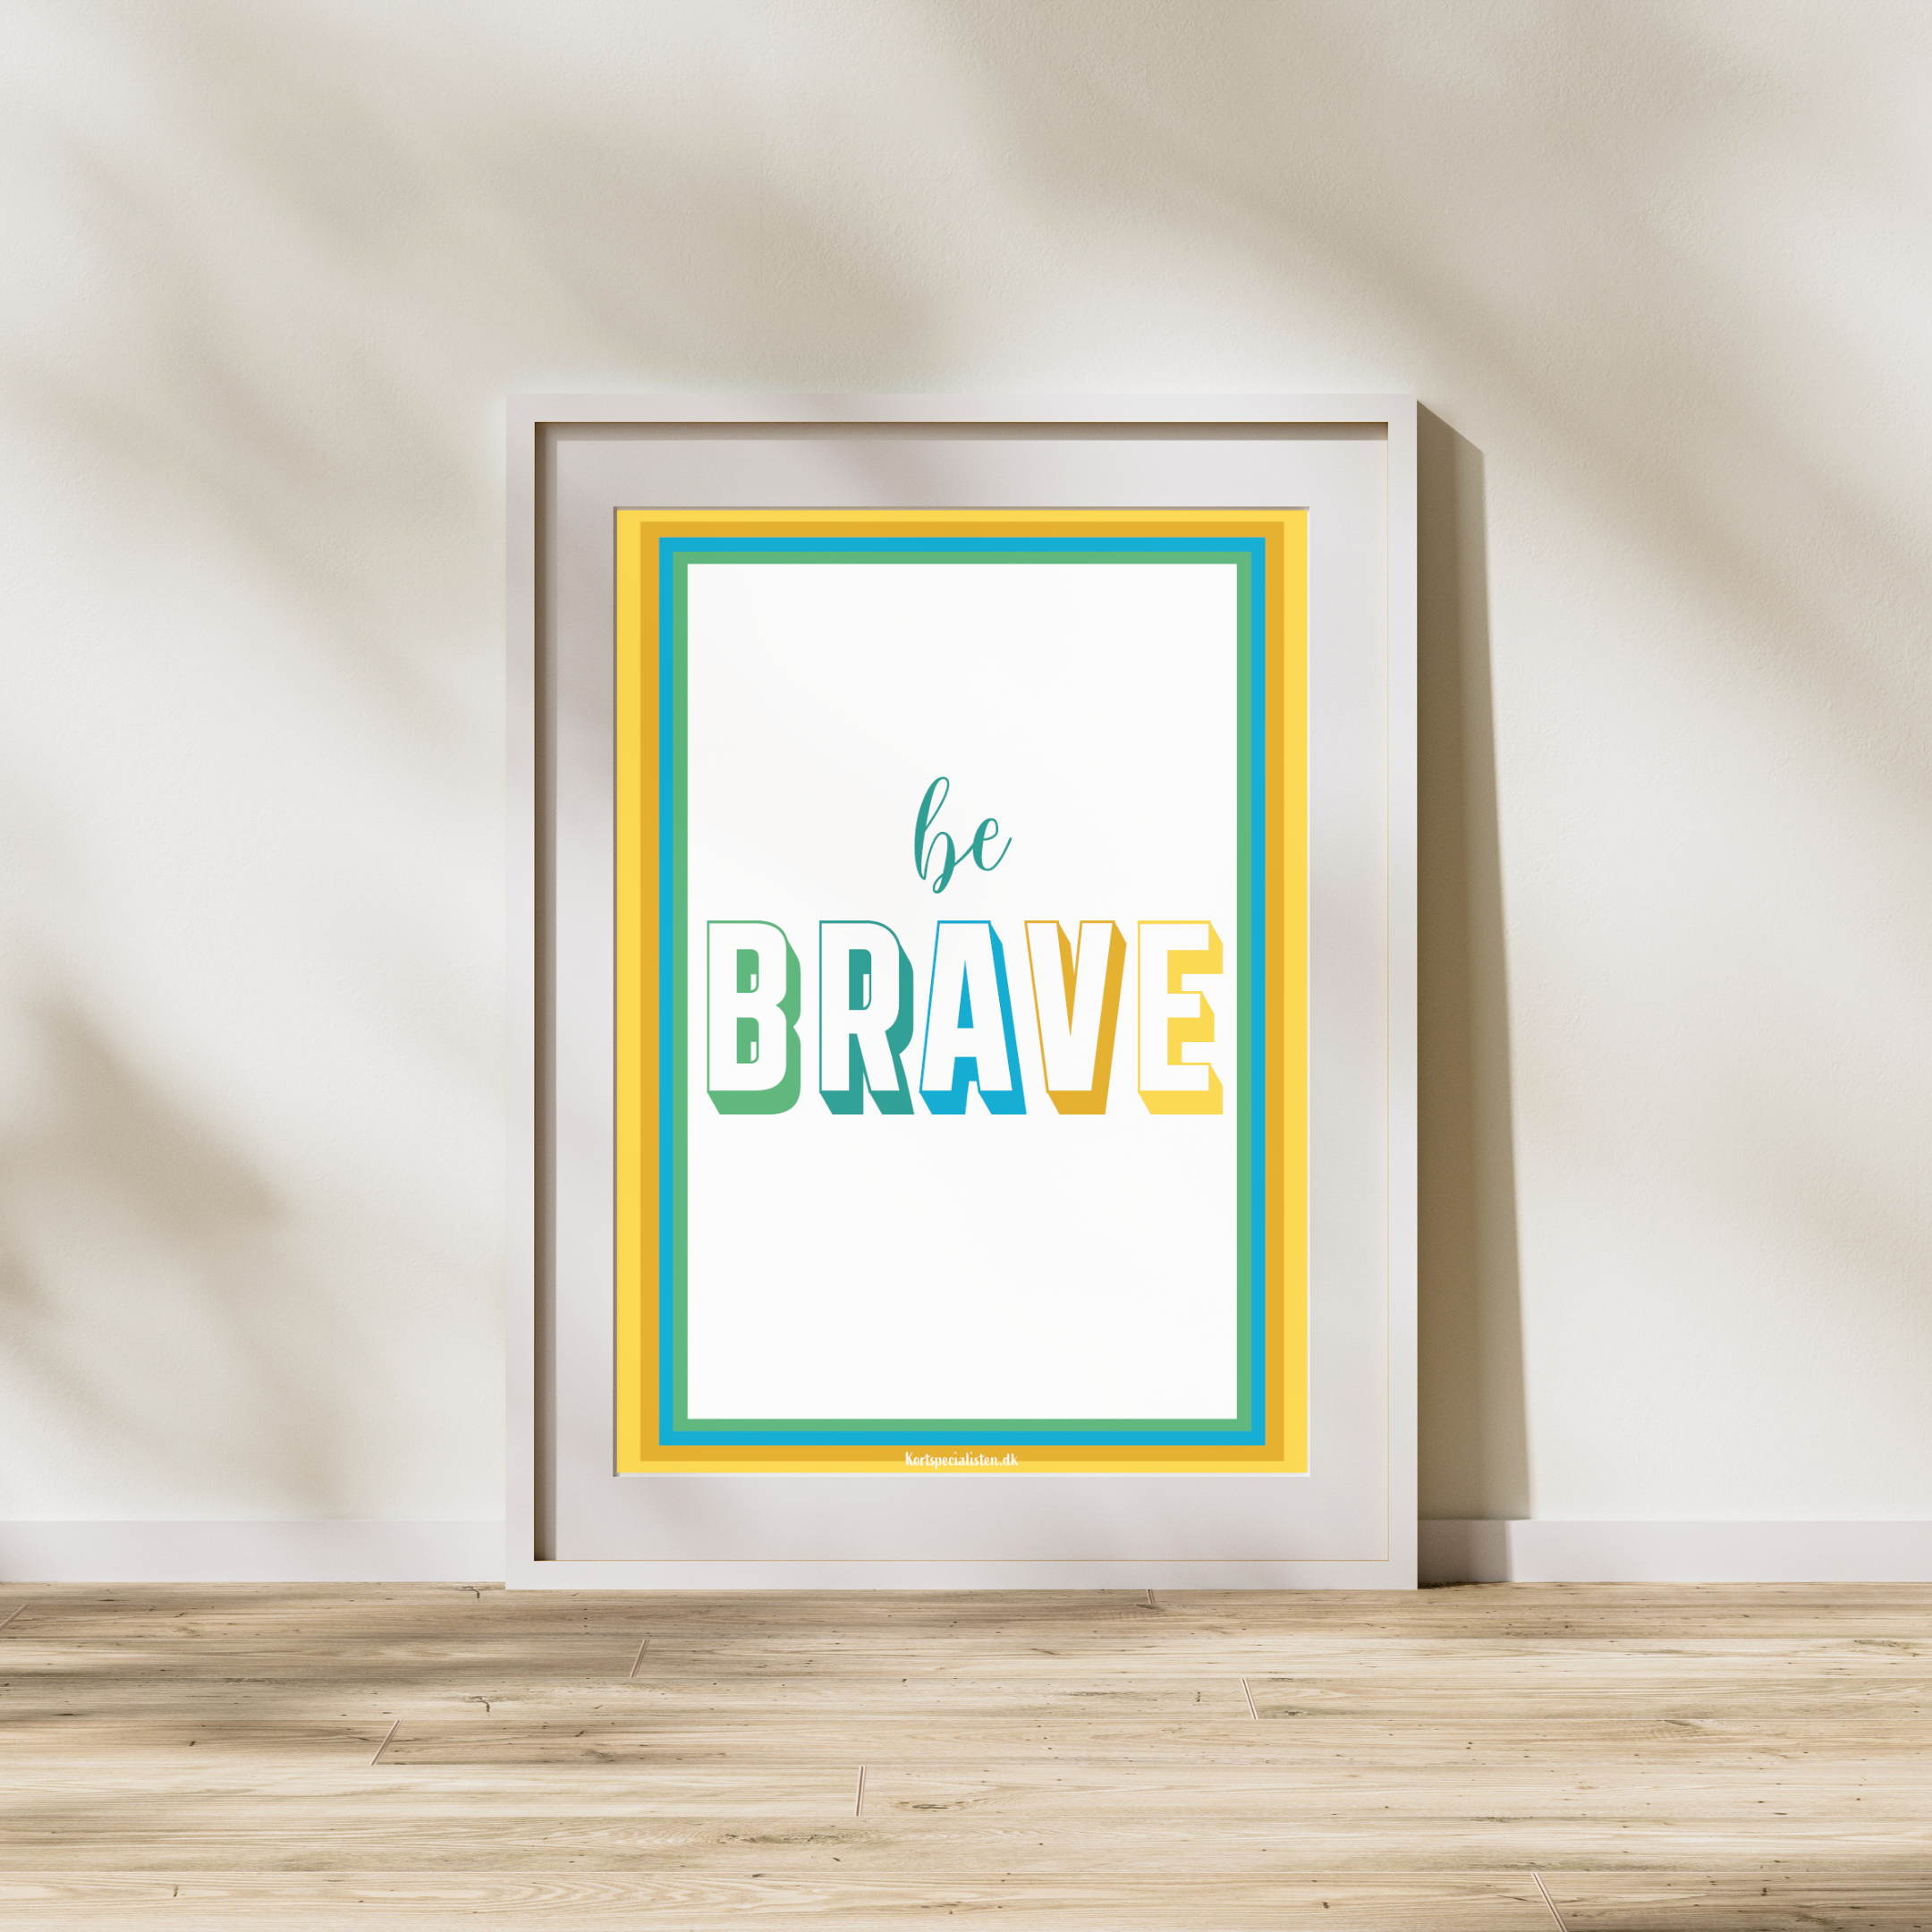 Be brave - Plakat